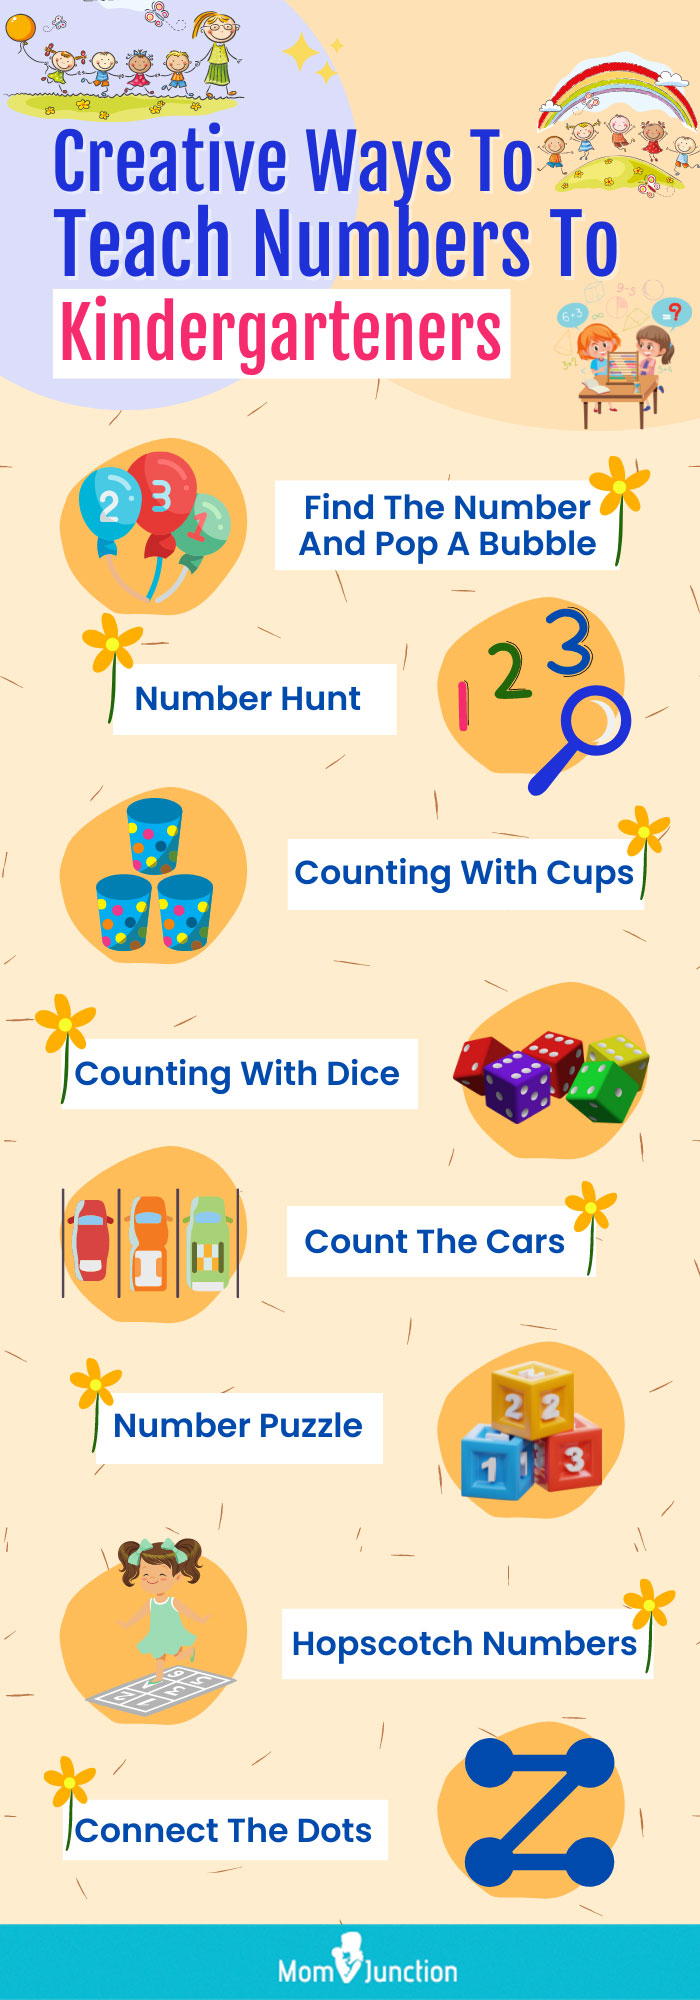 creative ways to teach numbers to kindergarteners [infographic]